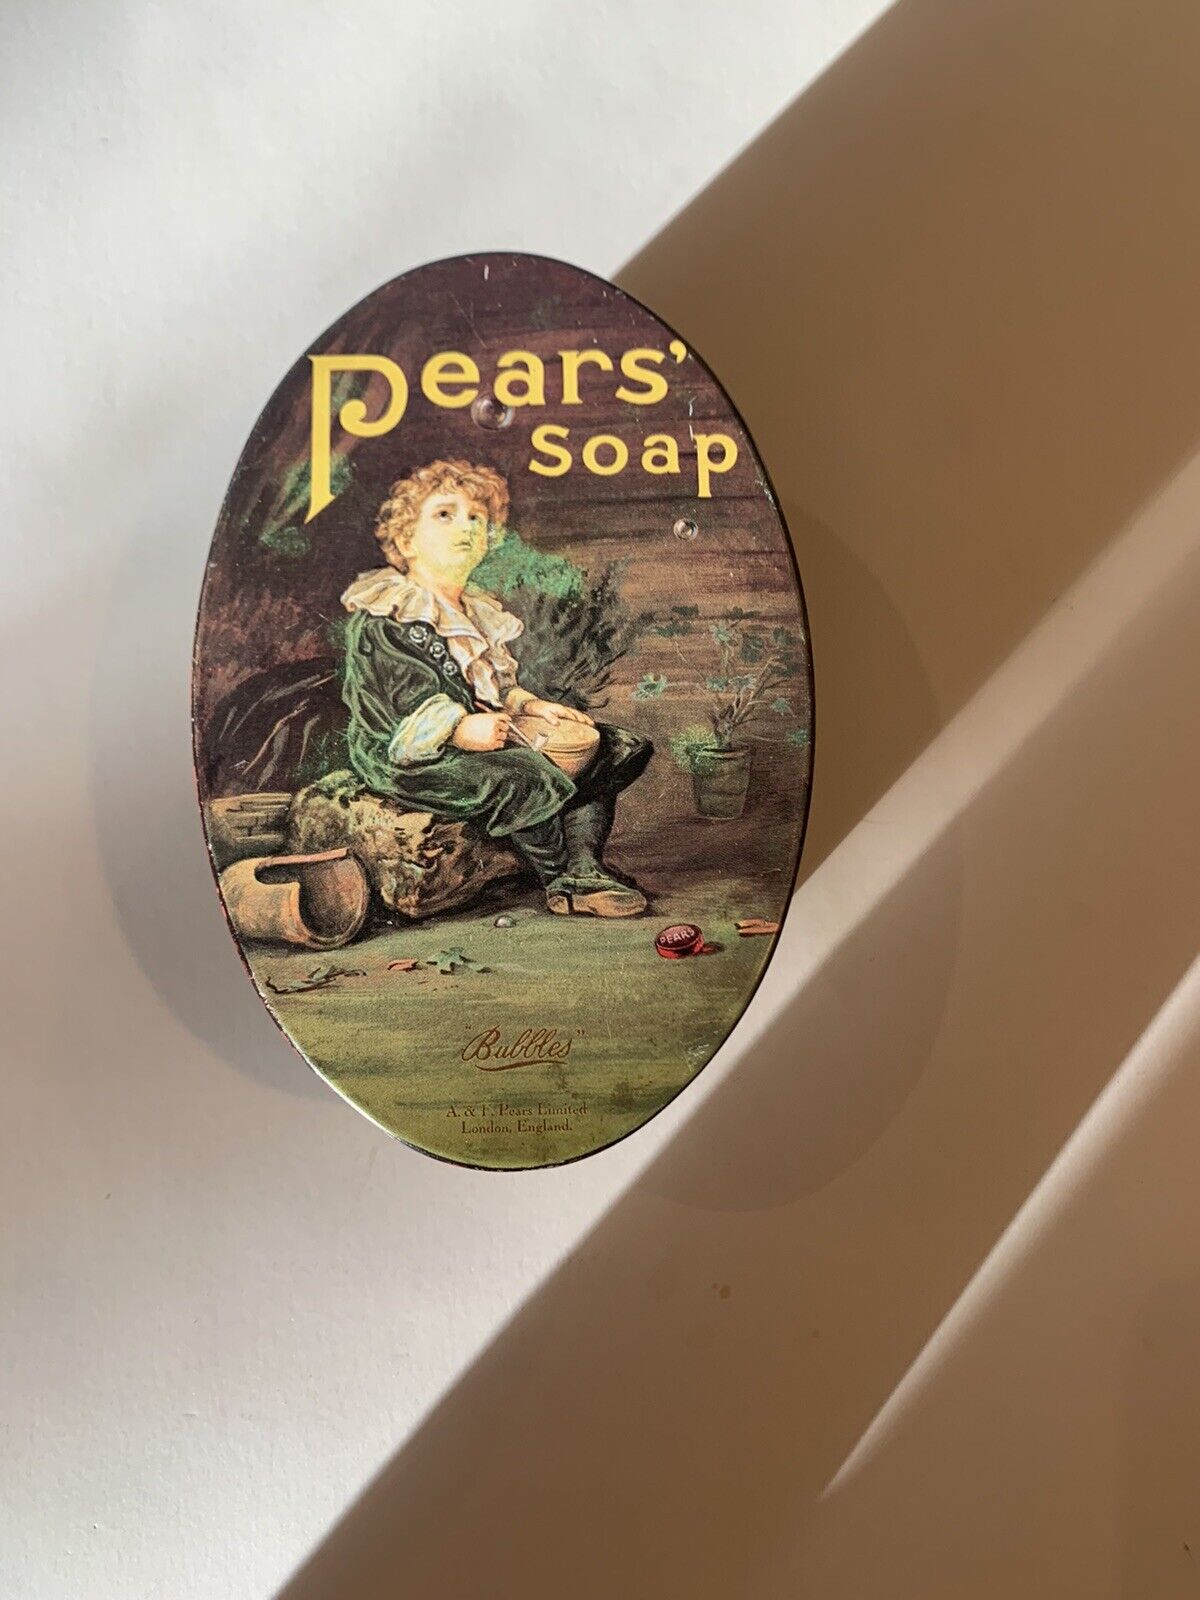 vintage Soap Tin, pears’ soap tin